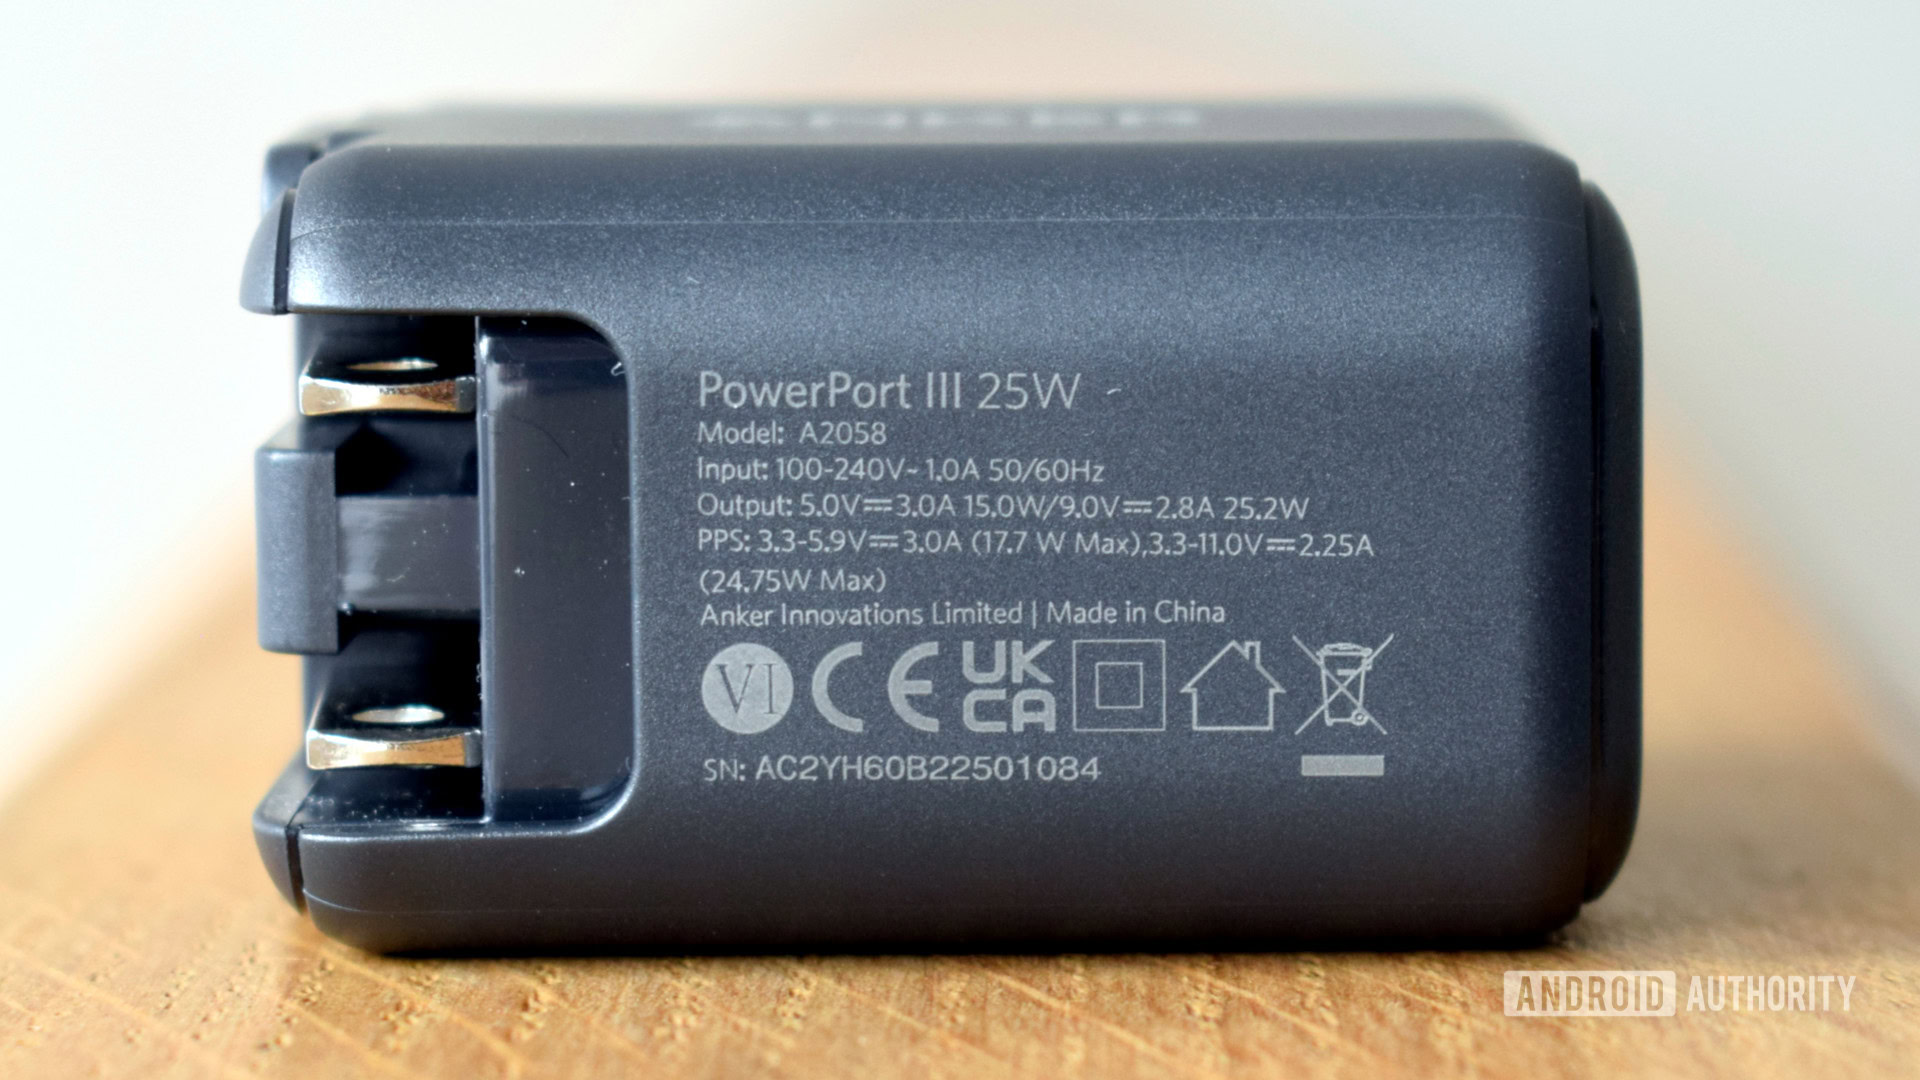 Anker PowerPort III 25W specifications